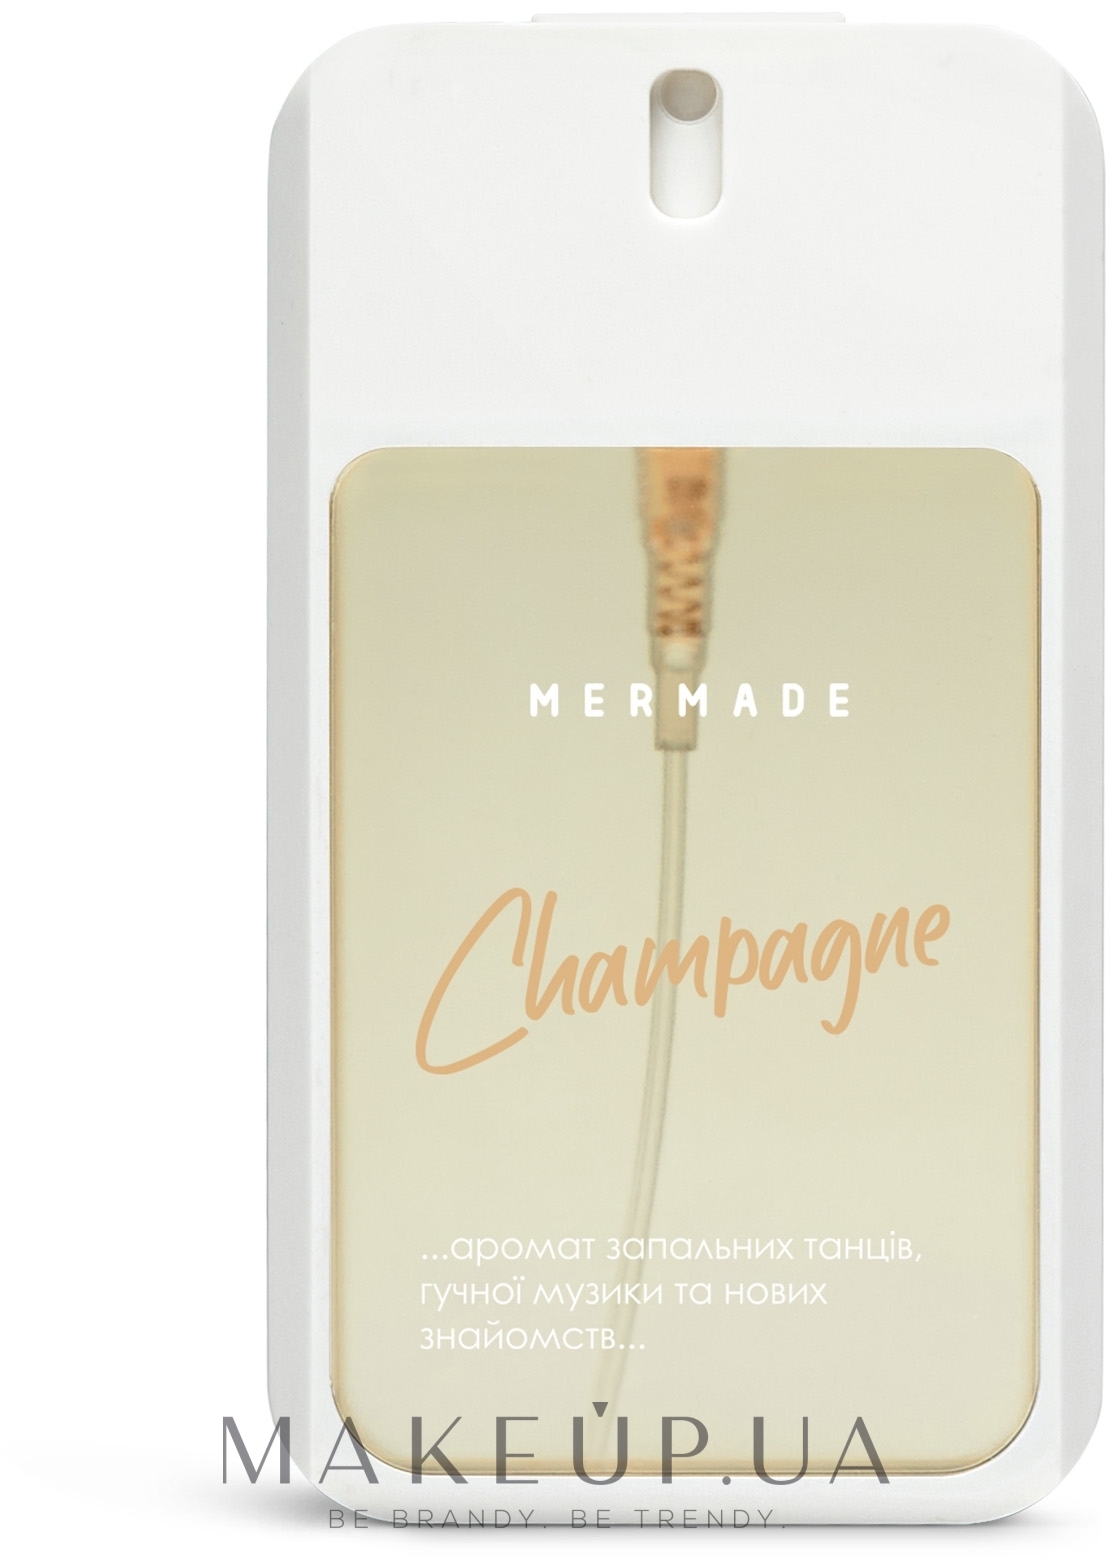 Mermade Champagne